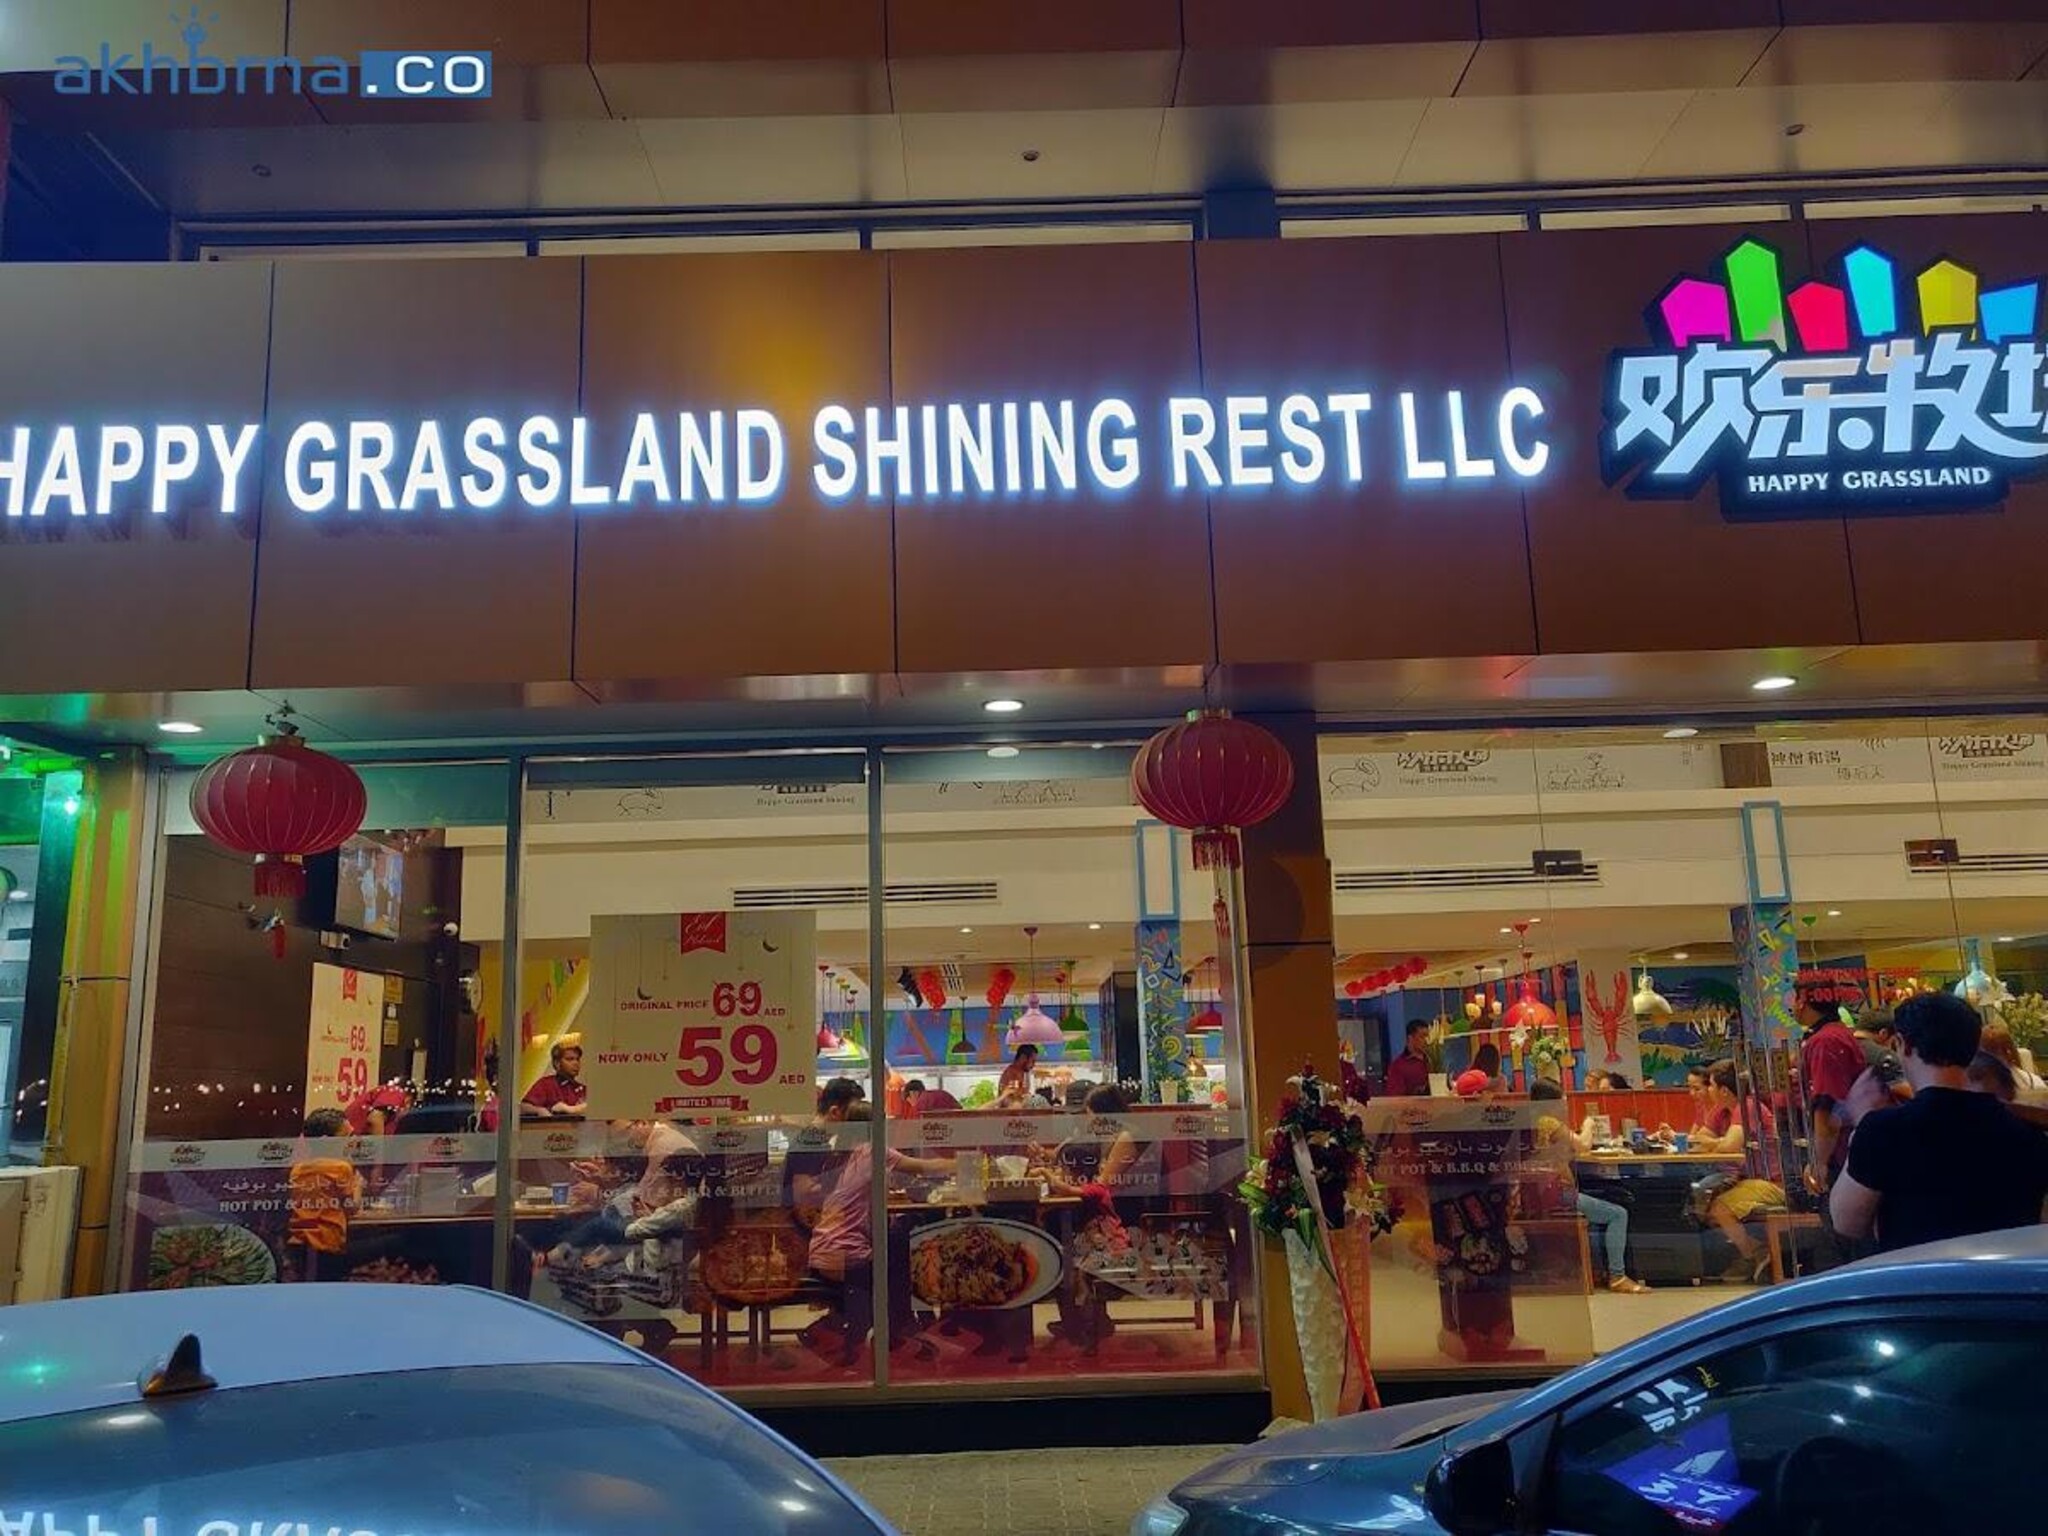 Abu Dhabi authority shut down Happy Grassland Restaurant & Grill for this reason